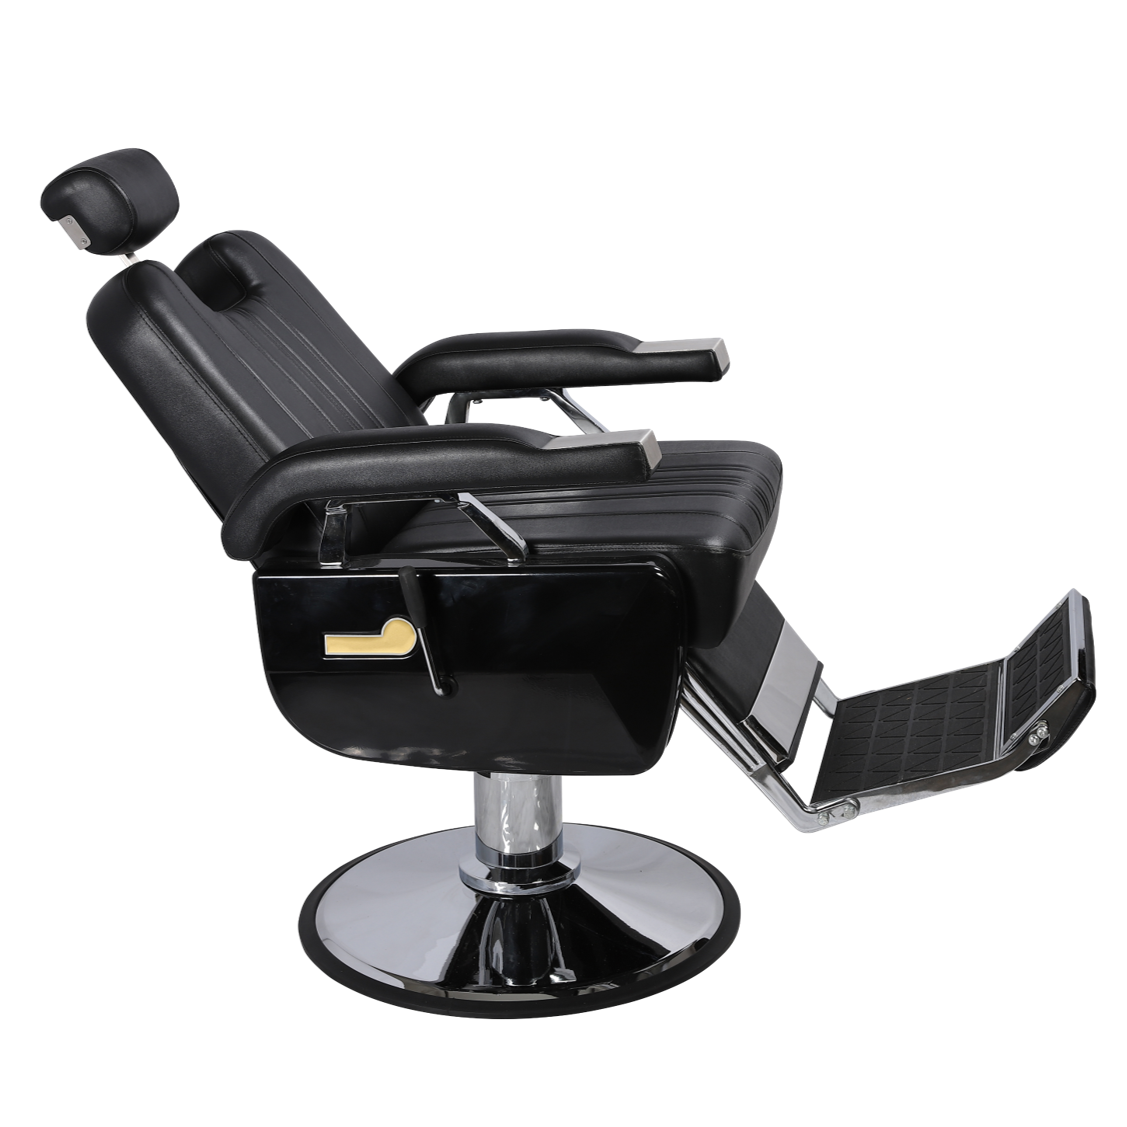 The Finley Barber Chair - Garfield Commercial Enterprises Salon Equipment Spa Furniture Barber Chair Luxury